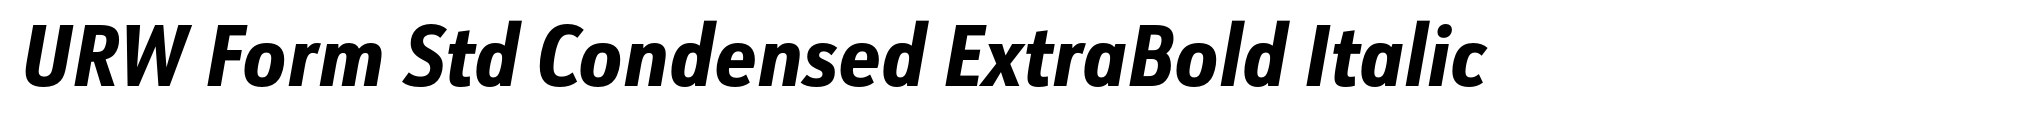 URW Form Std Condensed ExtraBold Italic image